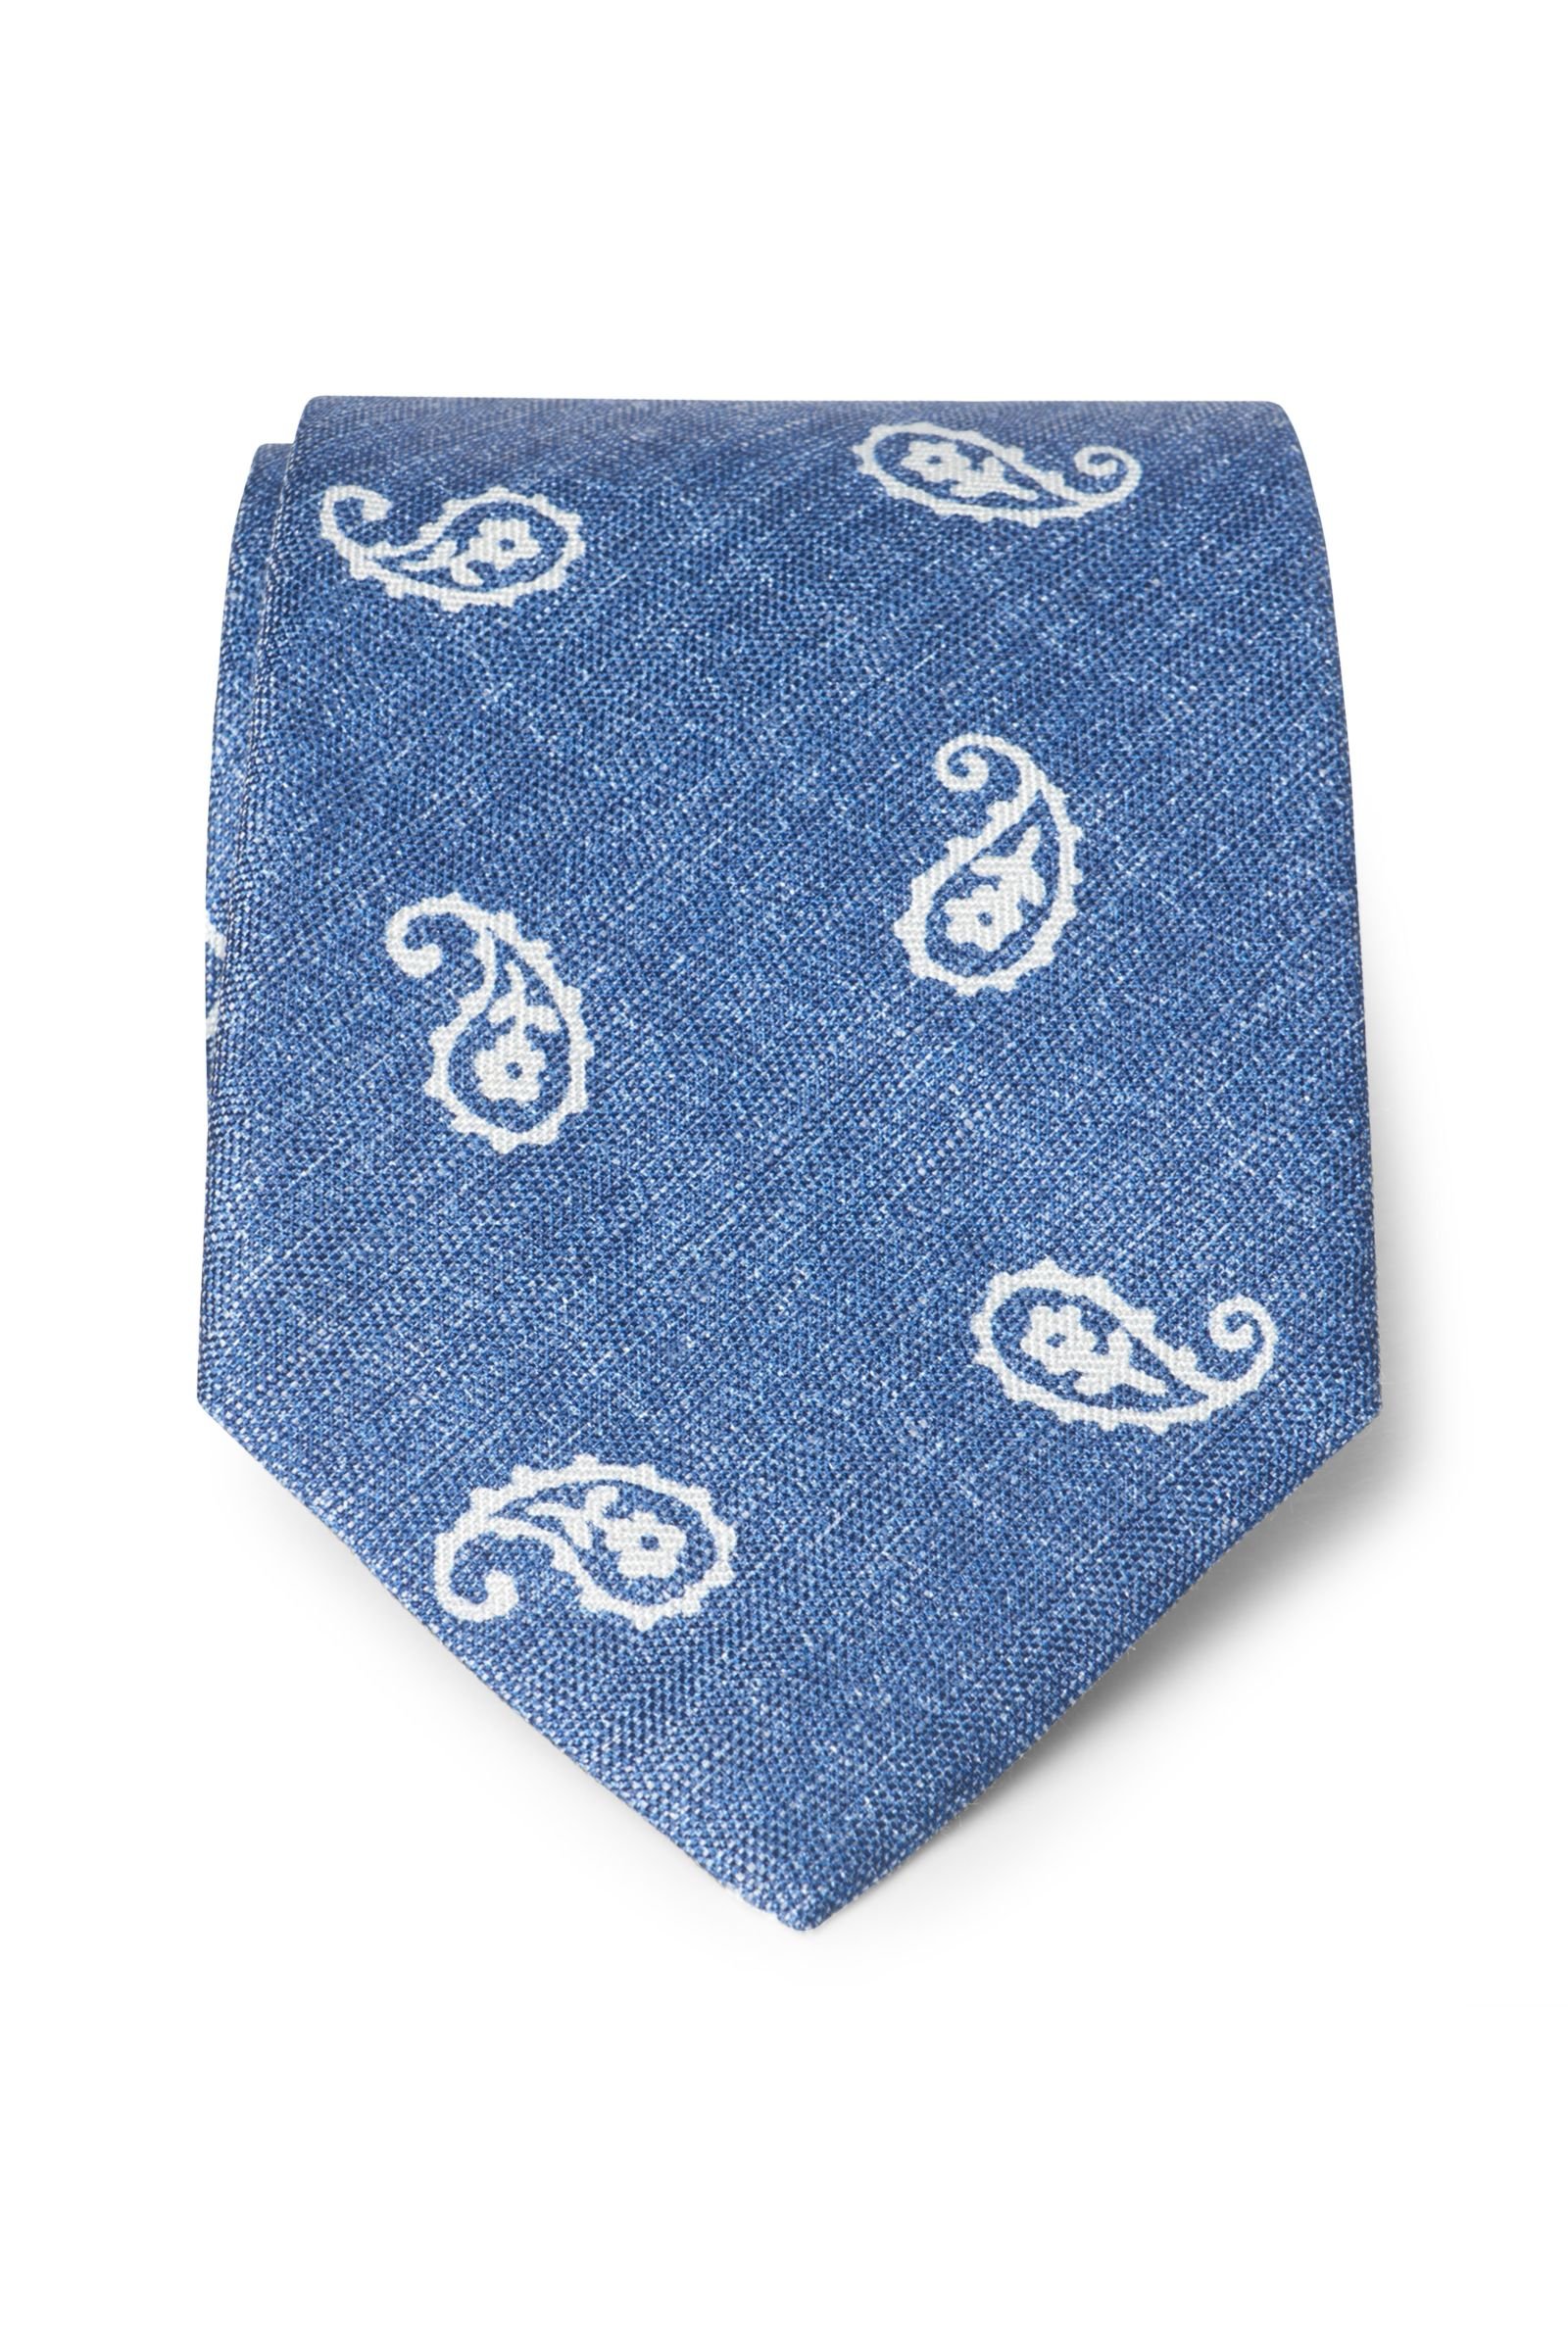 Tie grey-blue patterned